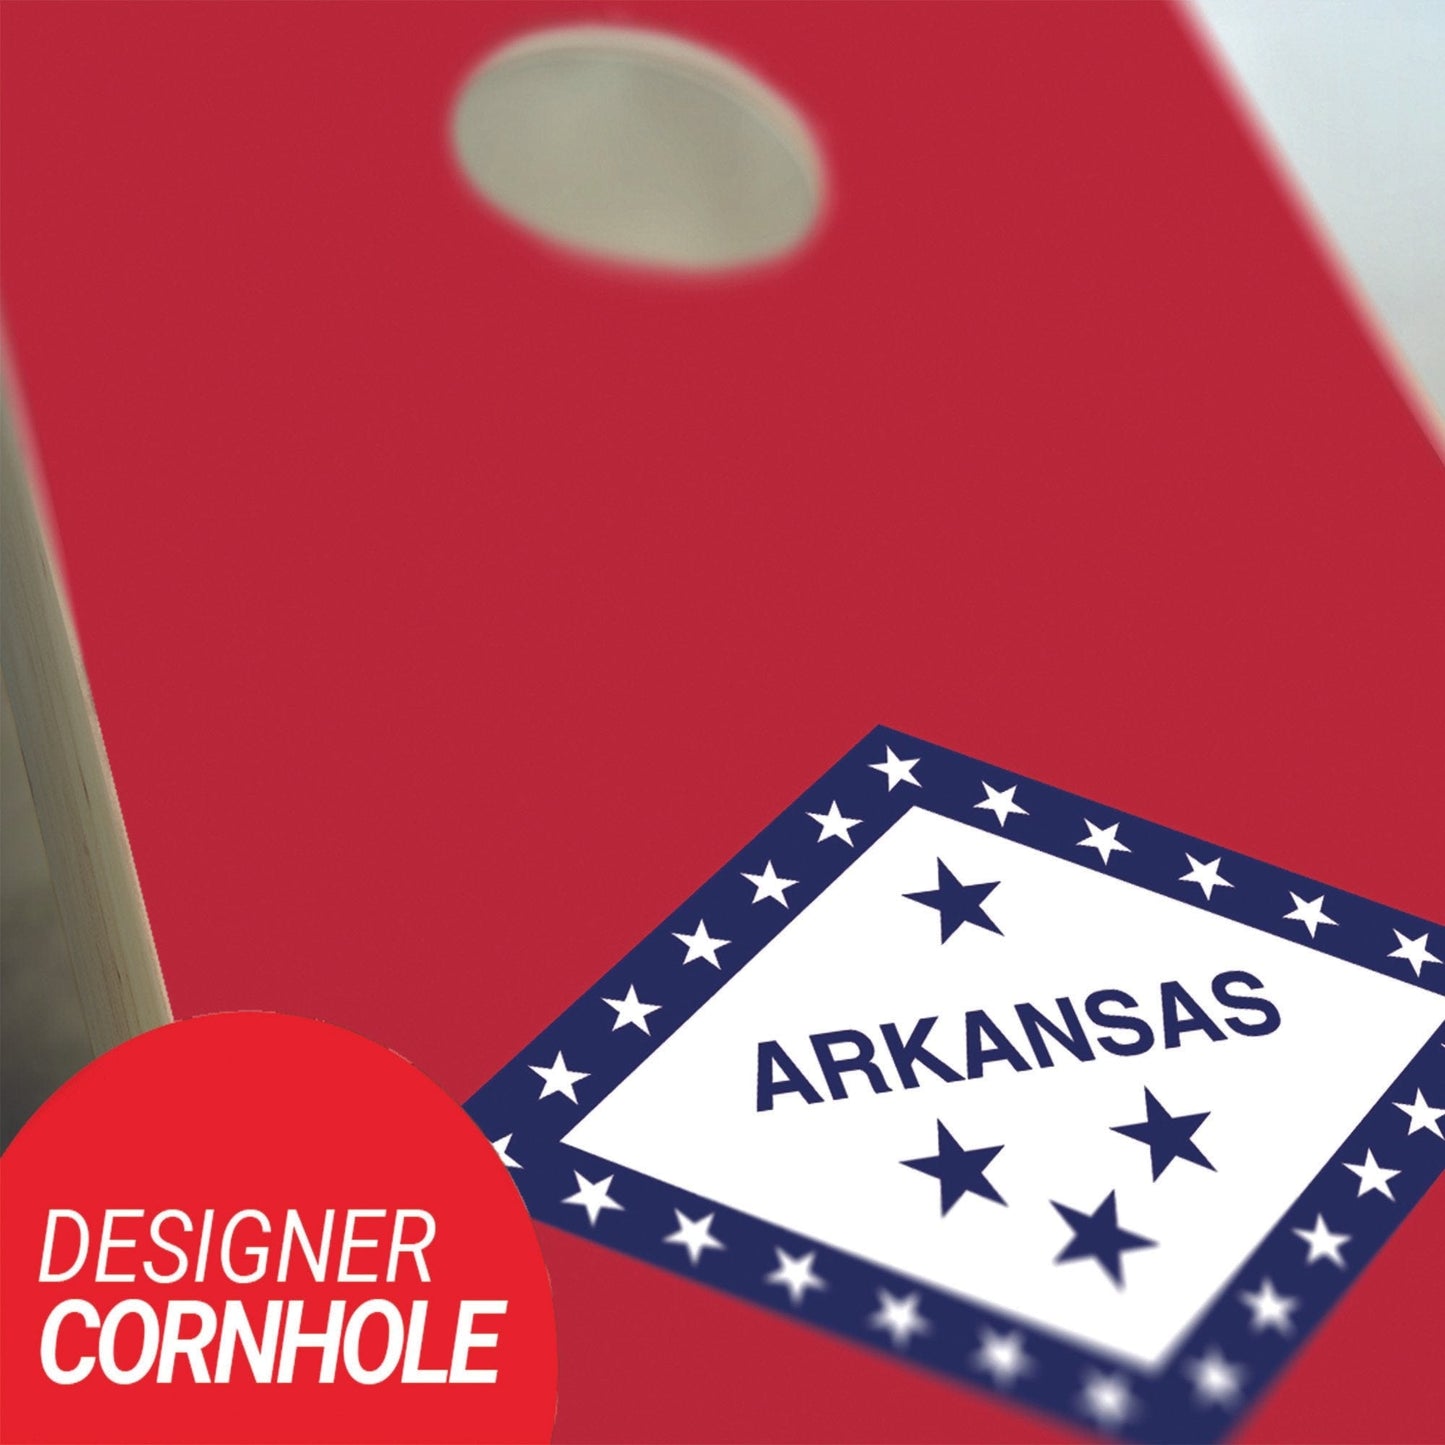 Arkansas Flag board close up